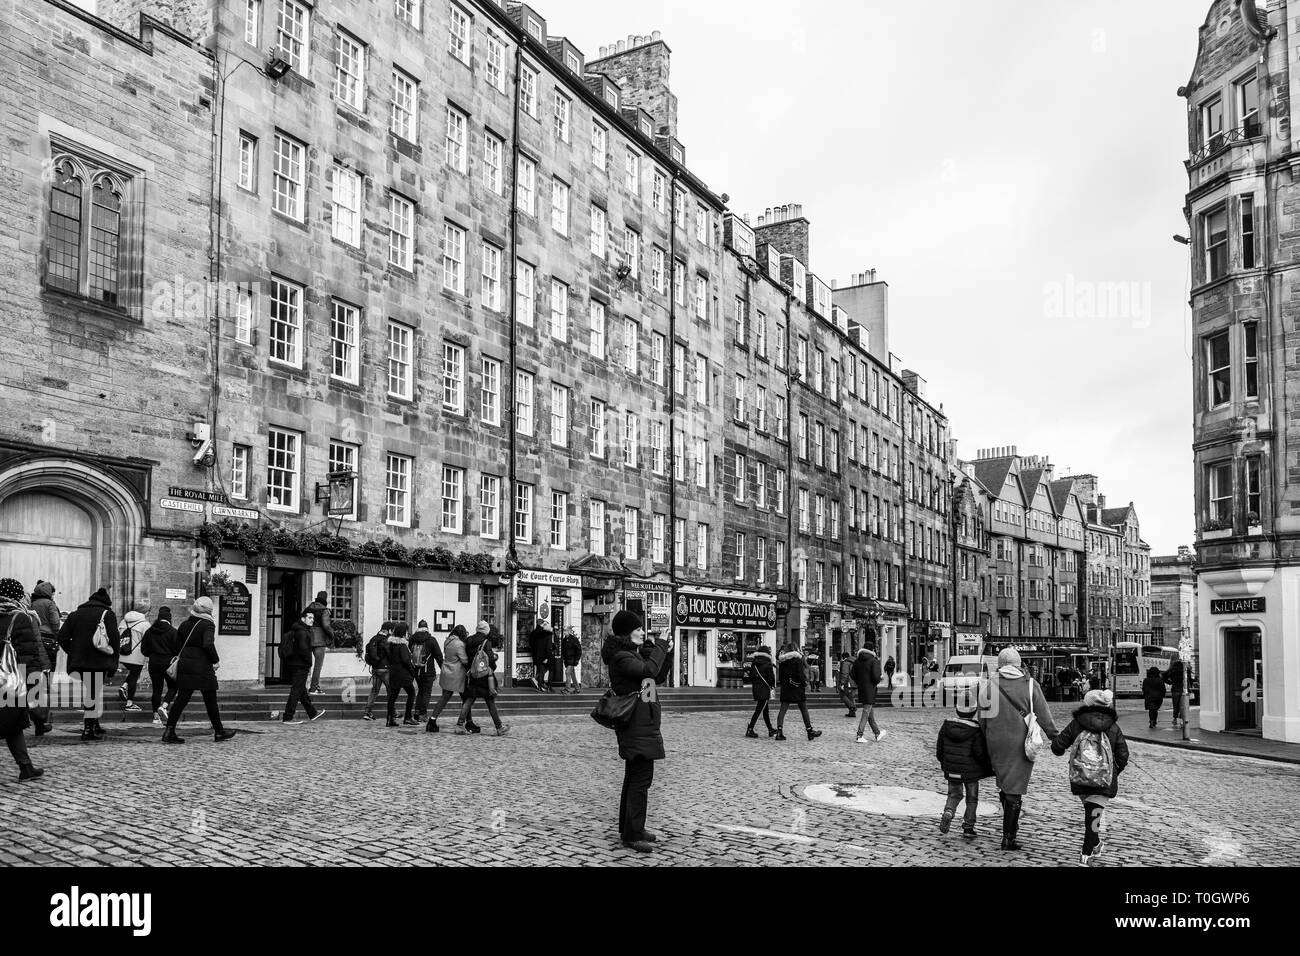 EDINBURGH, SCOTLAND - FEBRUARY 9, 2019 - The Royal Mile (Lawnmarket) is the heart of Edinburgh’s Old Town Stock Photo